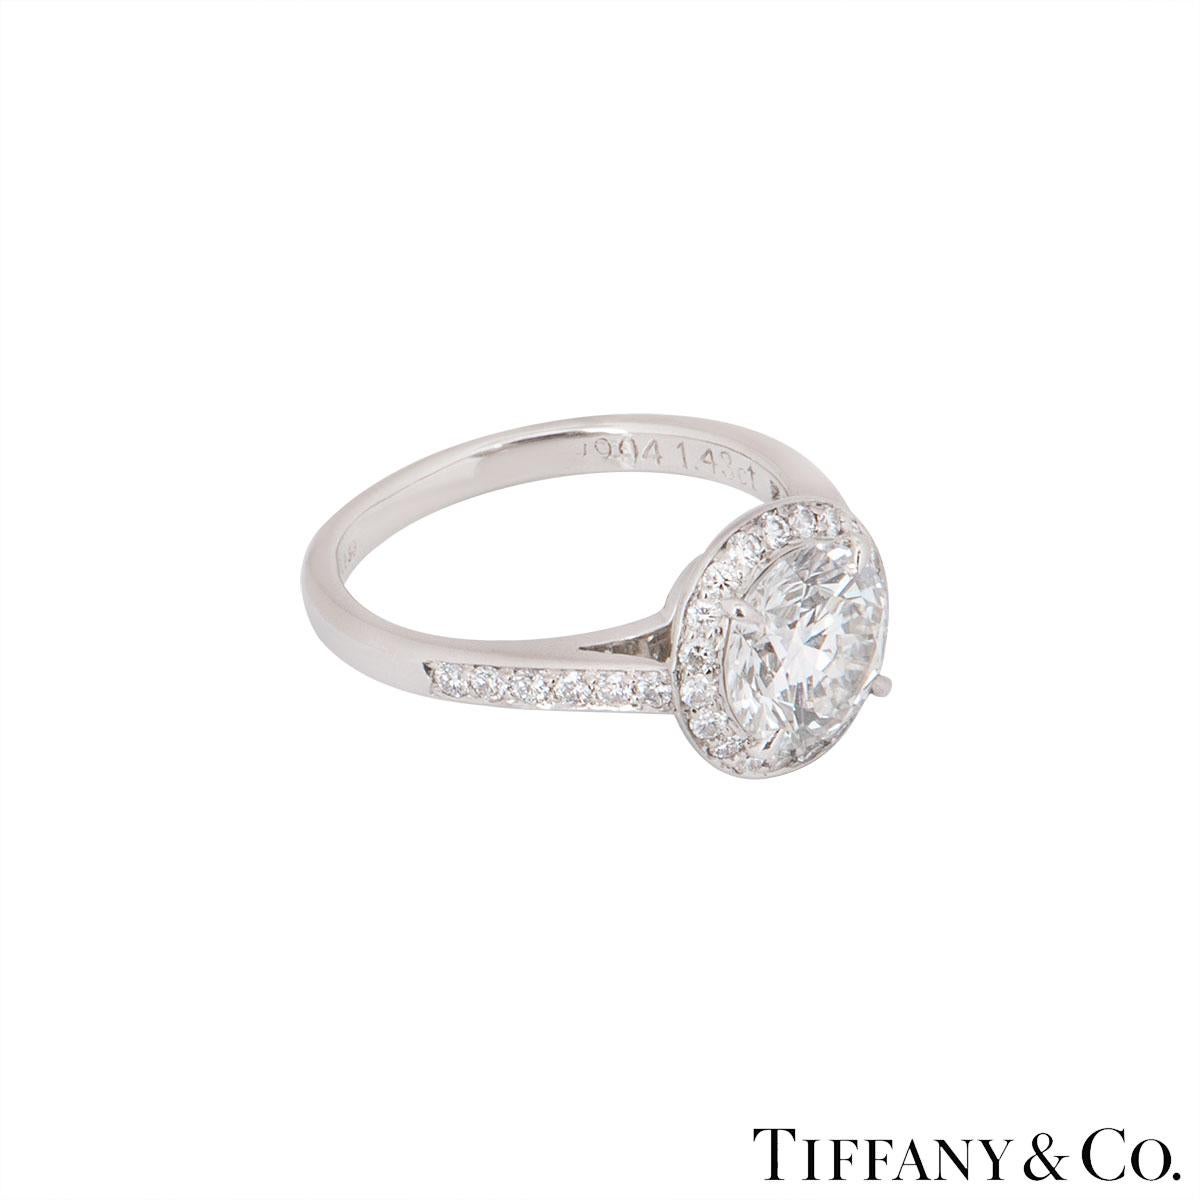 Women's Tiffany & Co. Platinum Diamond Halo Soleste Ring 1.43 Carat Solitaire